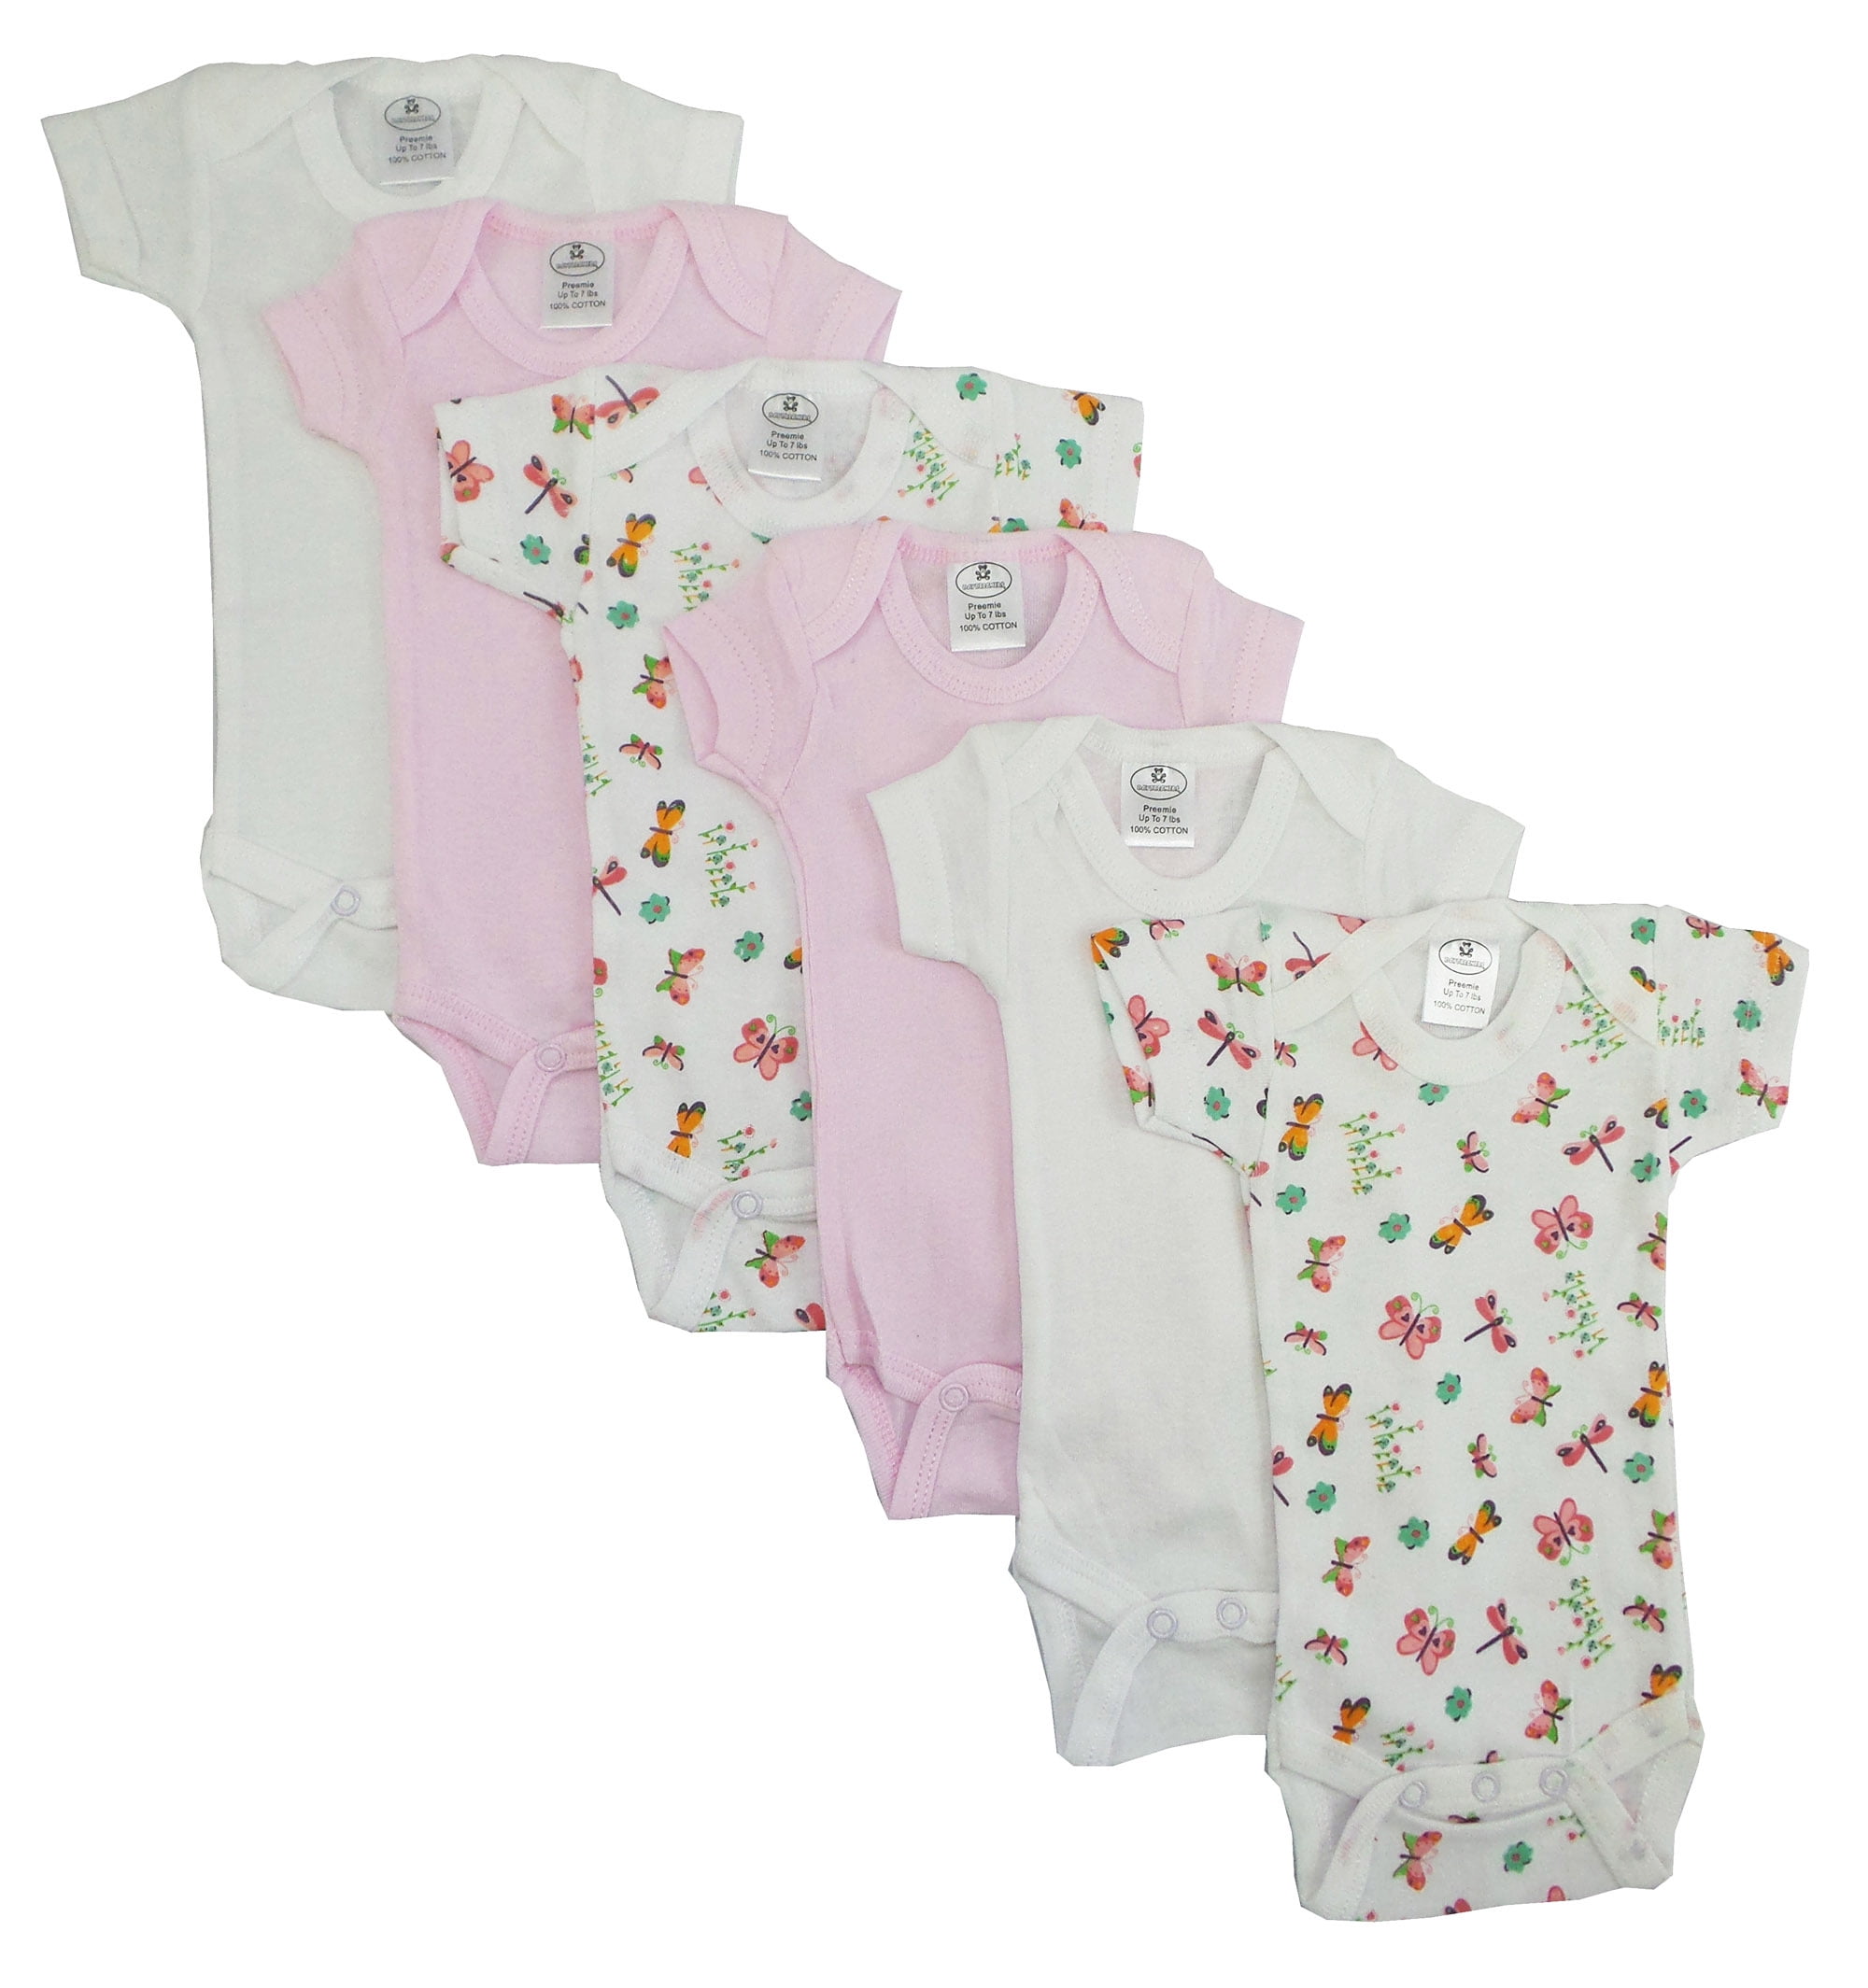 Cs-005p-005p Girls Short Sleeve With Printed, White & Pink - Preemie